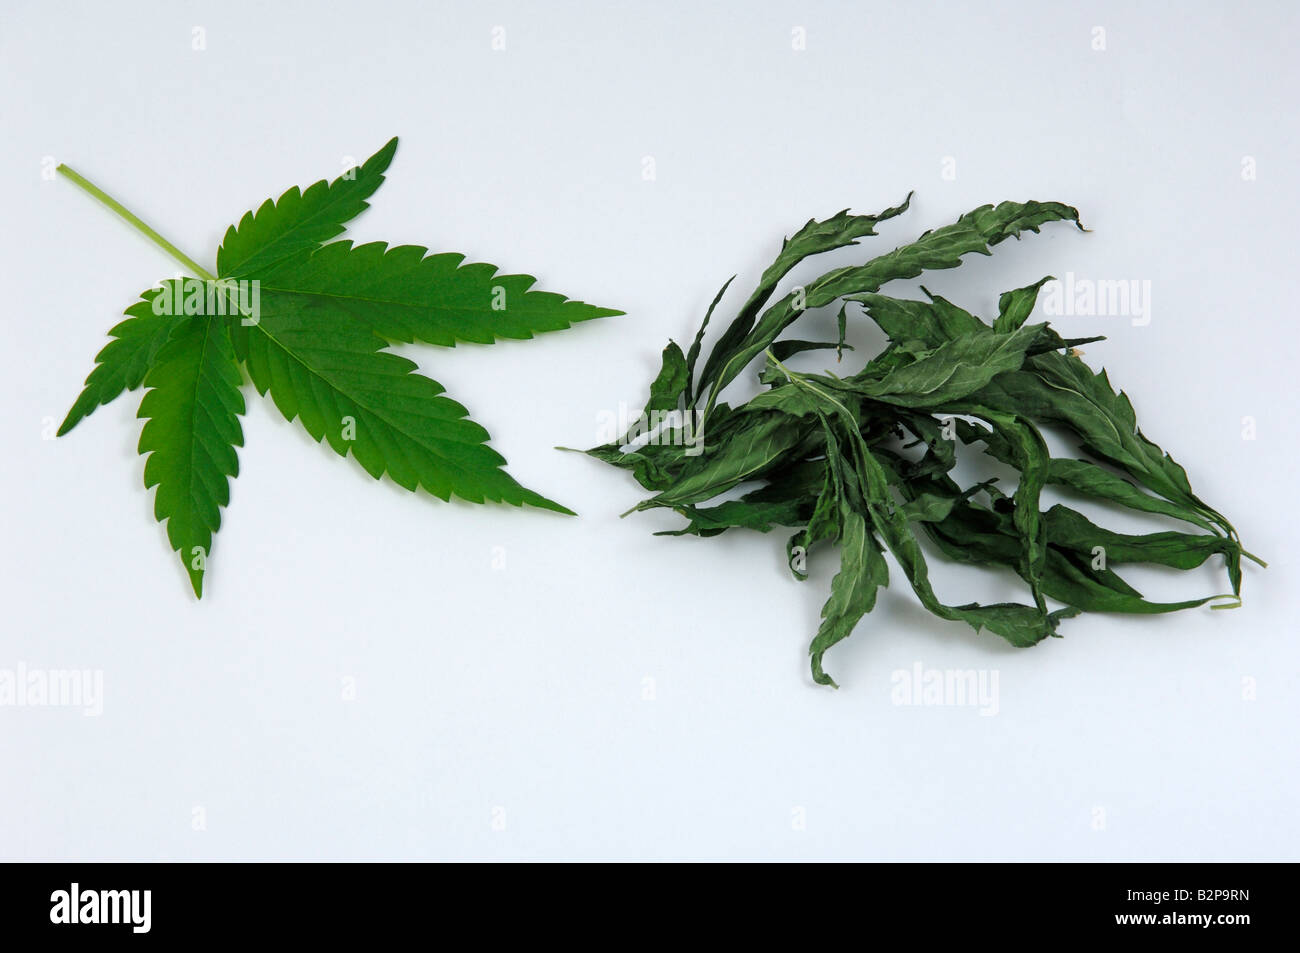 Hemp, Cannabis (Cannabis sativa), fresh leaf and dried leaves, studio picture Stock Photo